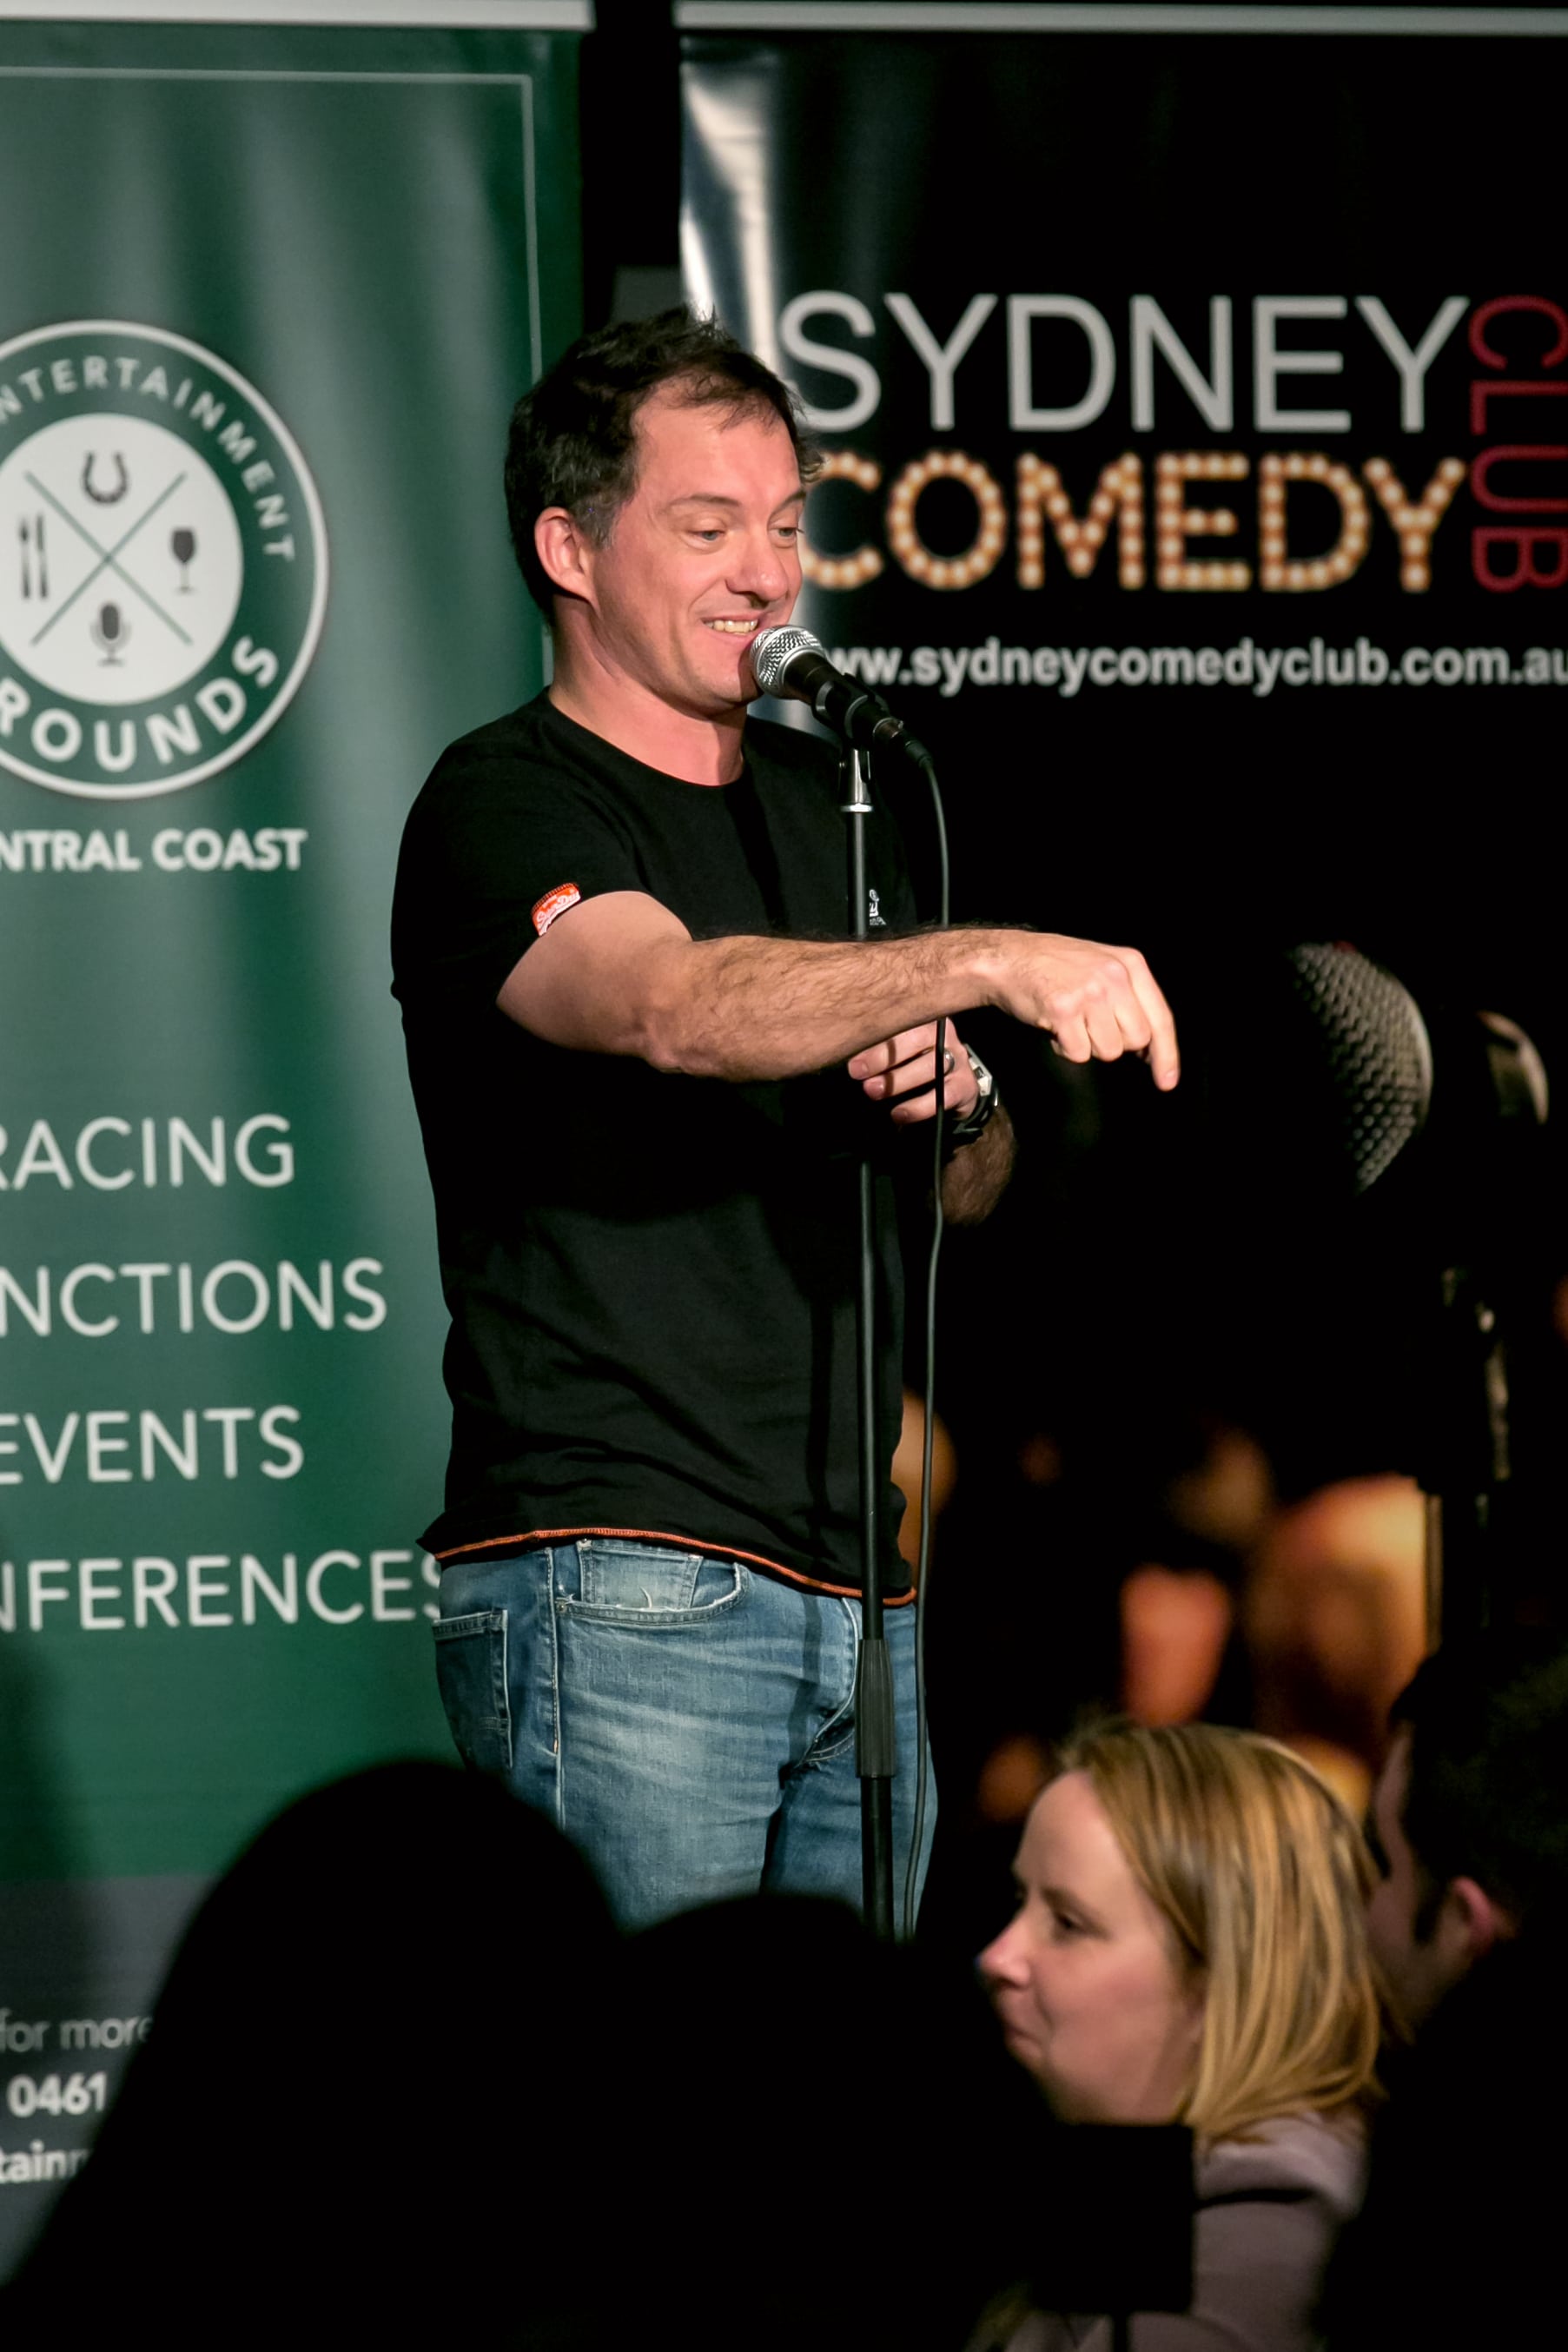 Sydney Comedy Club at The EG - POSTPONED